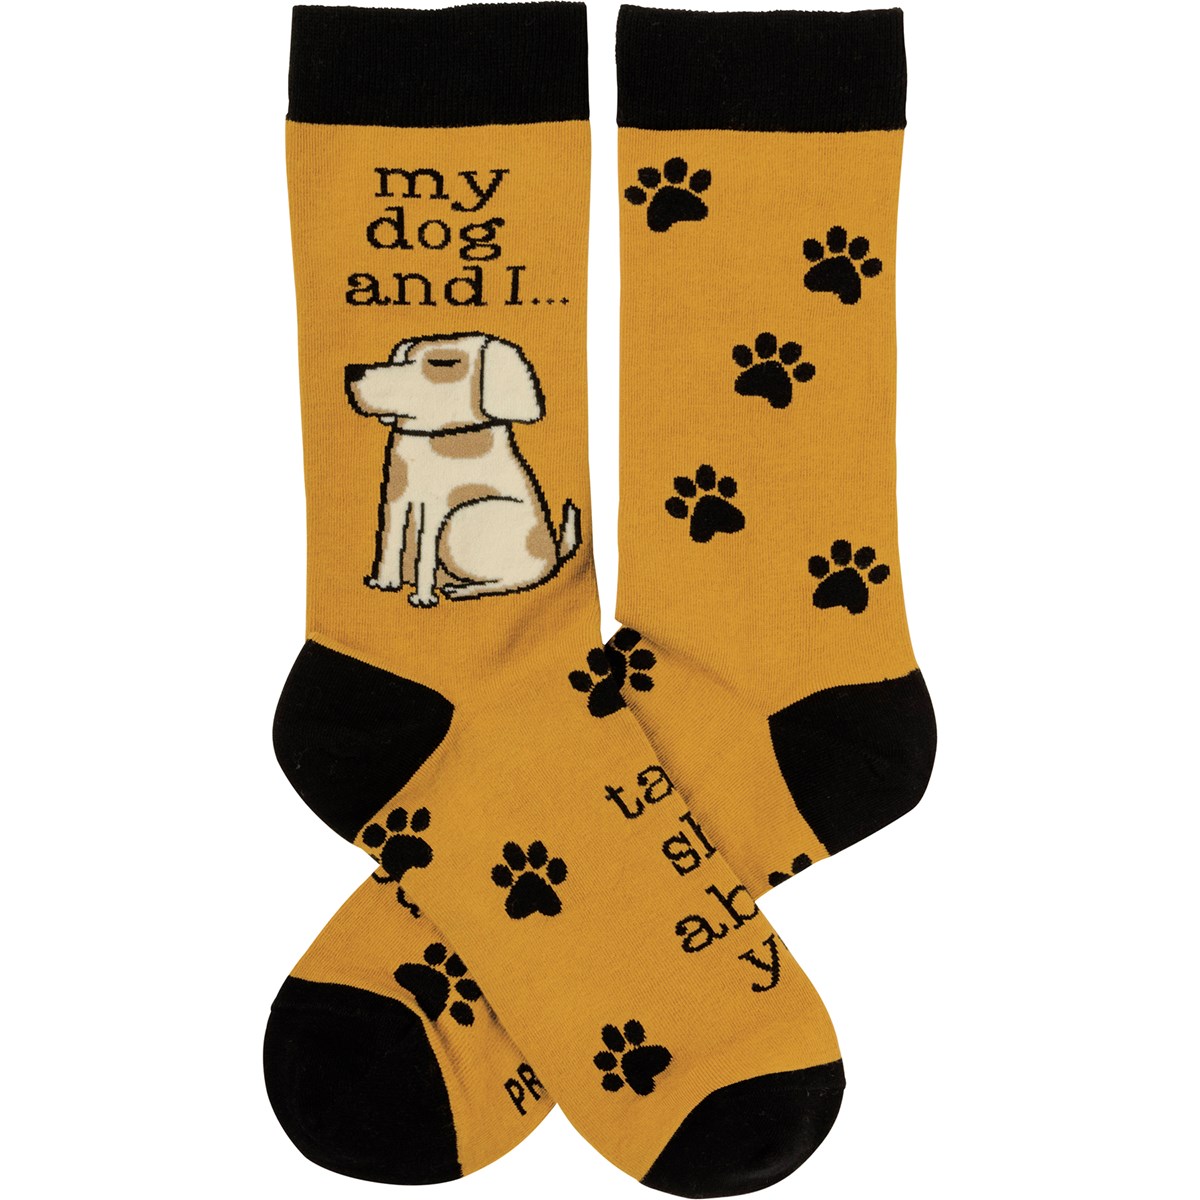 Dog And I Talk About You Socks - Cotton, Nylon, Spandex